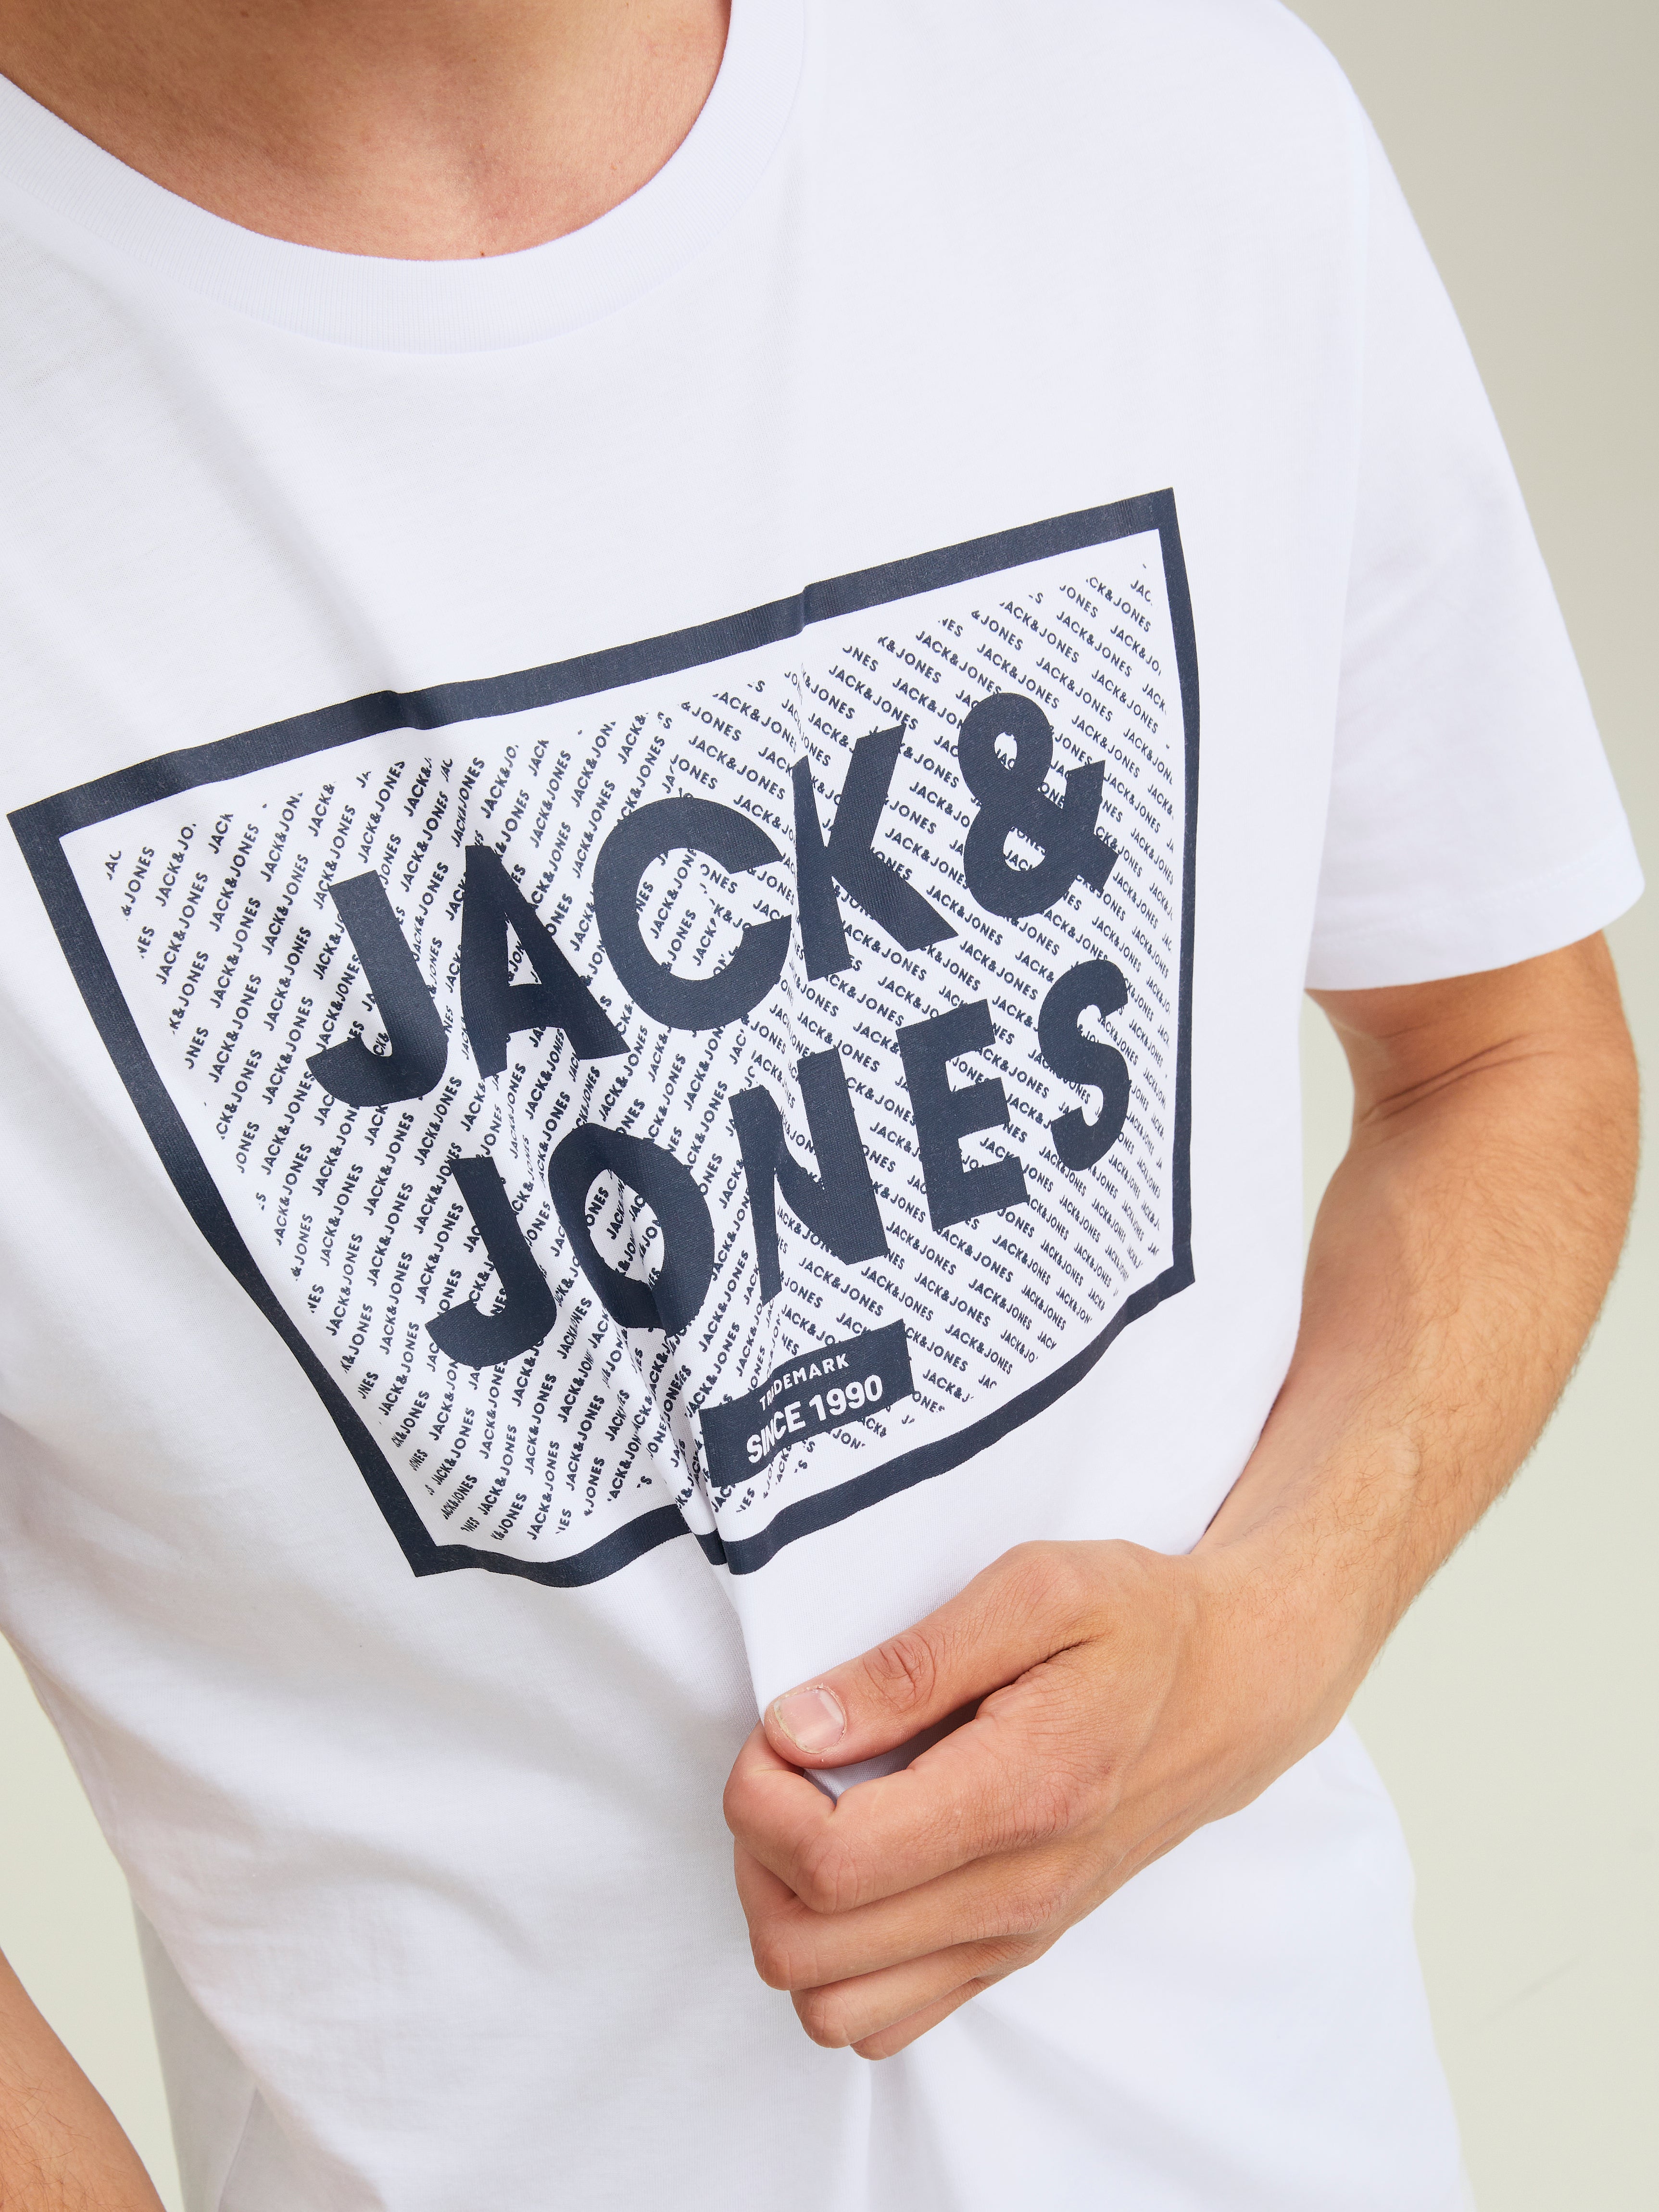 JACK & JONES Jjace Tee S Crew Neck 3 pièces MP T-Shirt, White Pack  White+Black+Pumpkin, S Homme : .fr: Mode